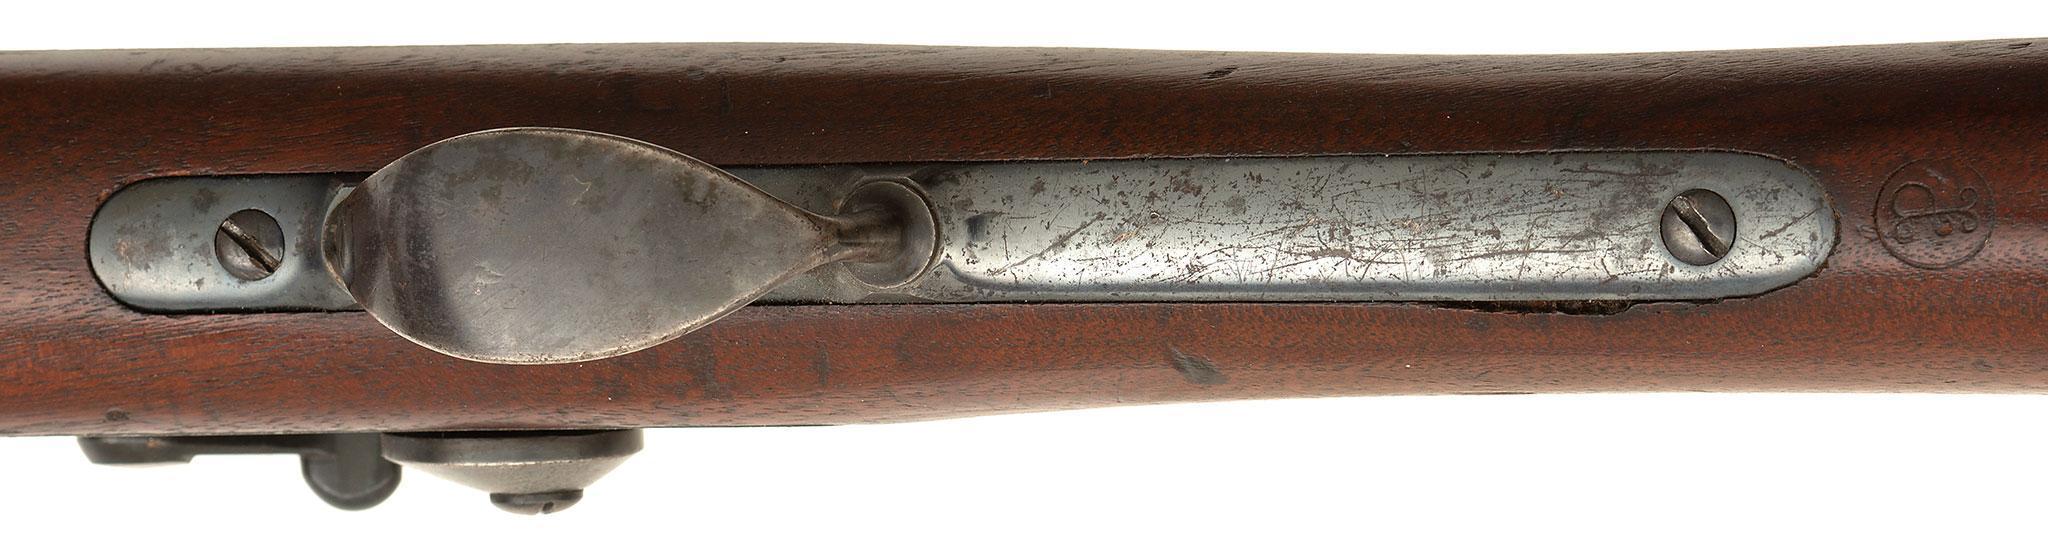 U.S. Model 1884 Springfield Trapdoor Cadet Rifle